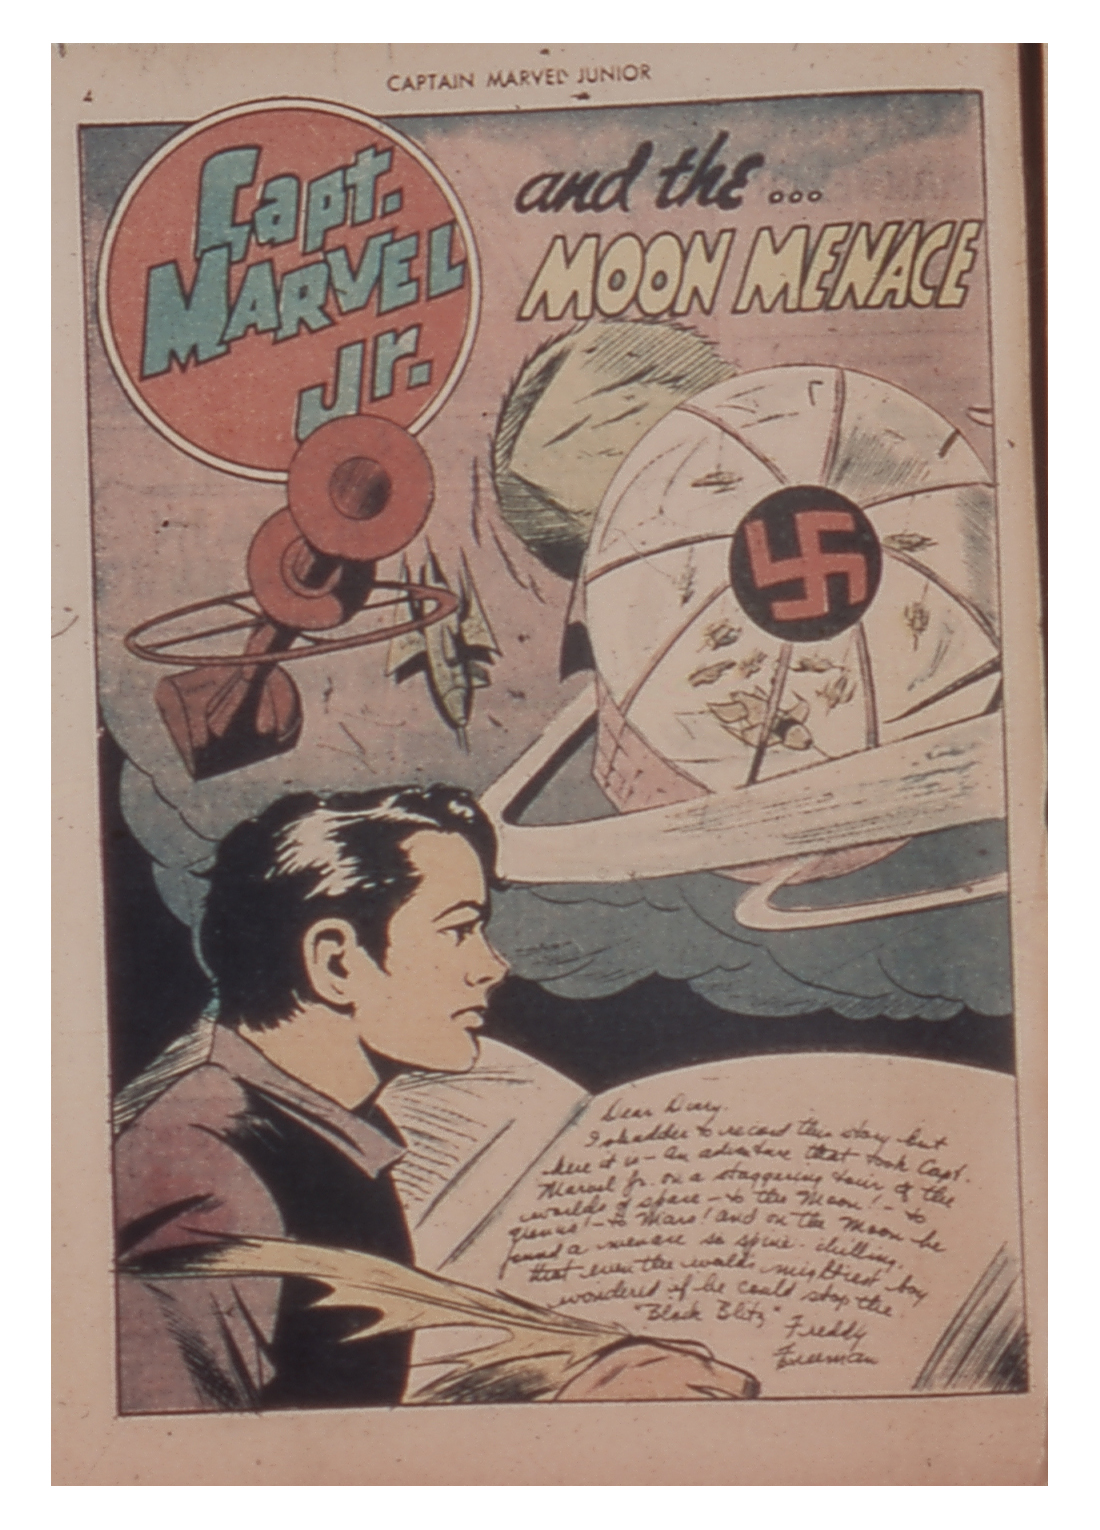 Read online Captain Marvel, Jr. comic -  Issue #10 - 5